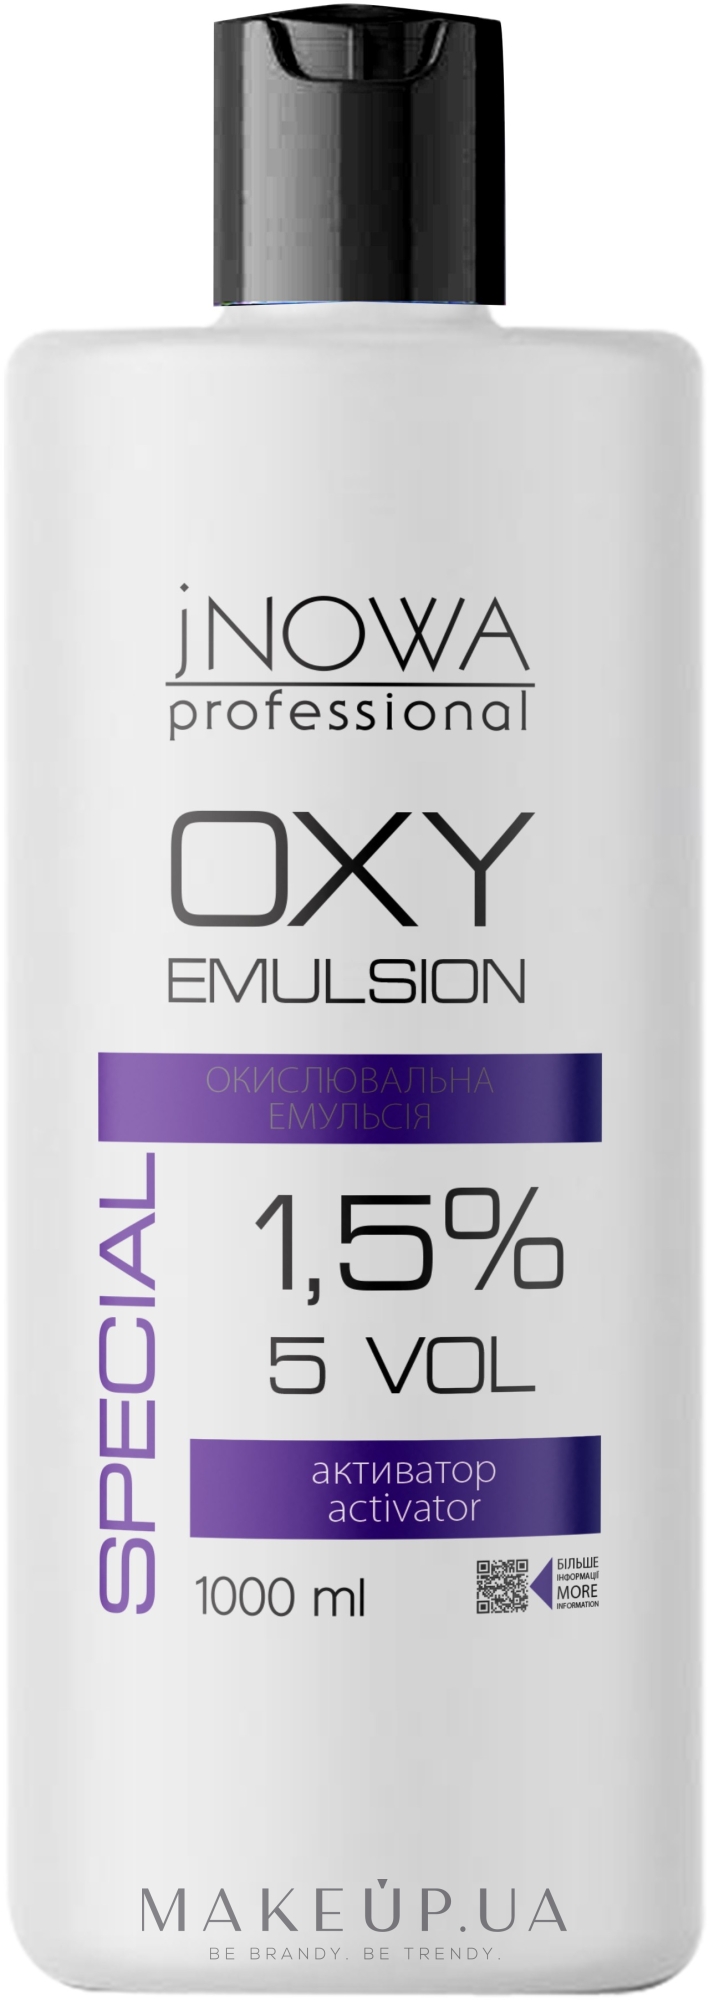 Окислительная эмульсия, 1.5 % - jNOWA Professional OXY 1.5 % (5 vol) — фото 1000ml